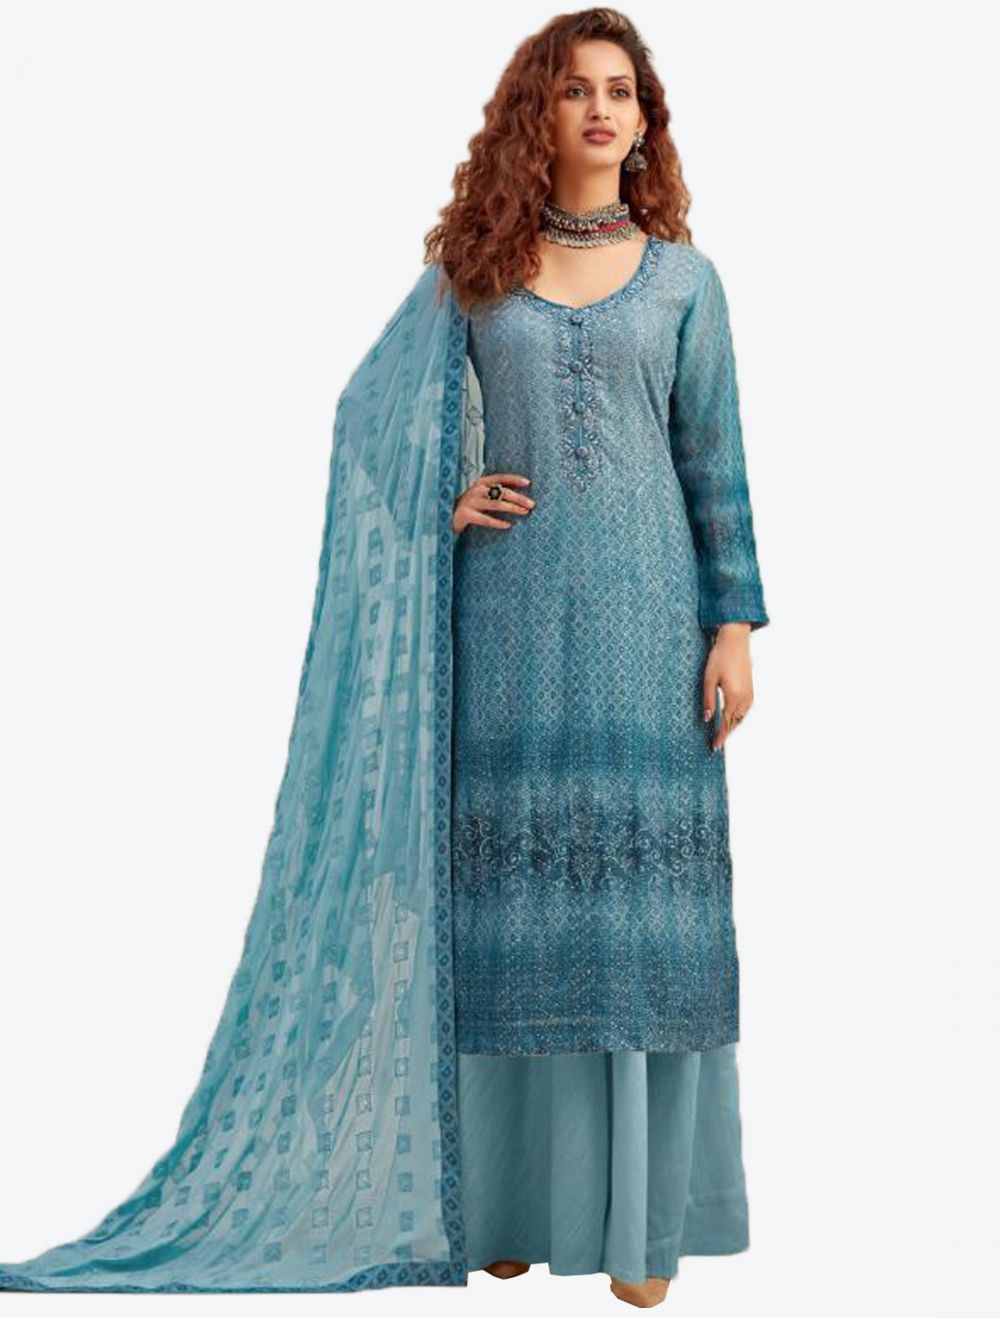 Chiffon Dress Material at Rs 740/piece | Ahmedabad | ID: 2853492999430